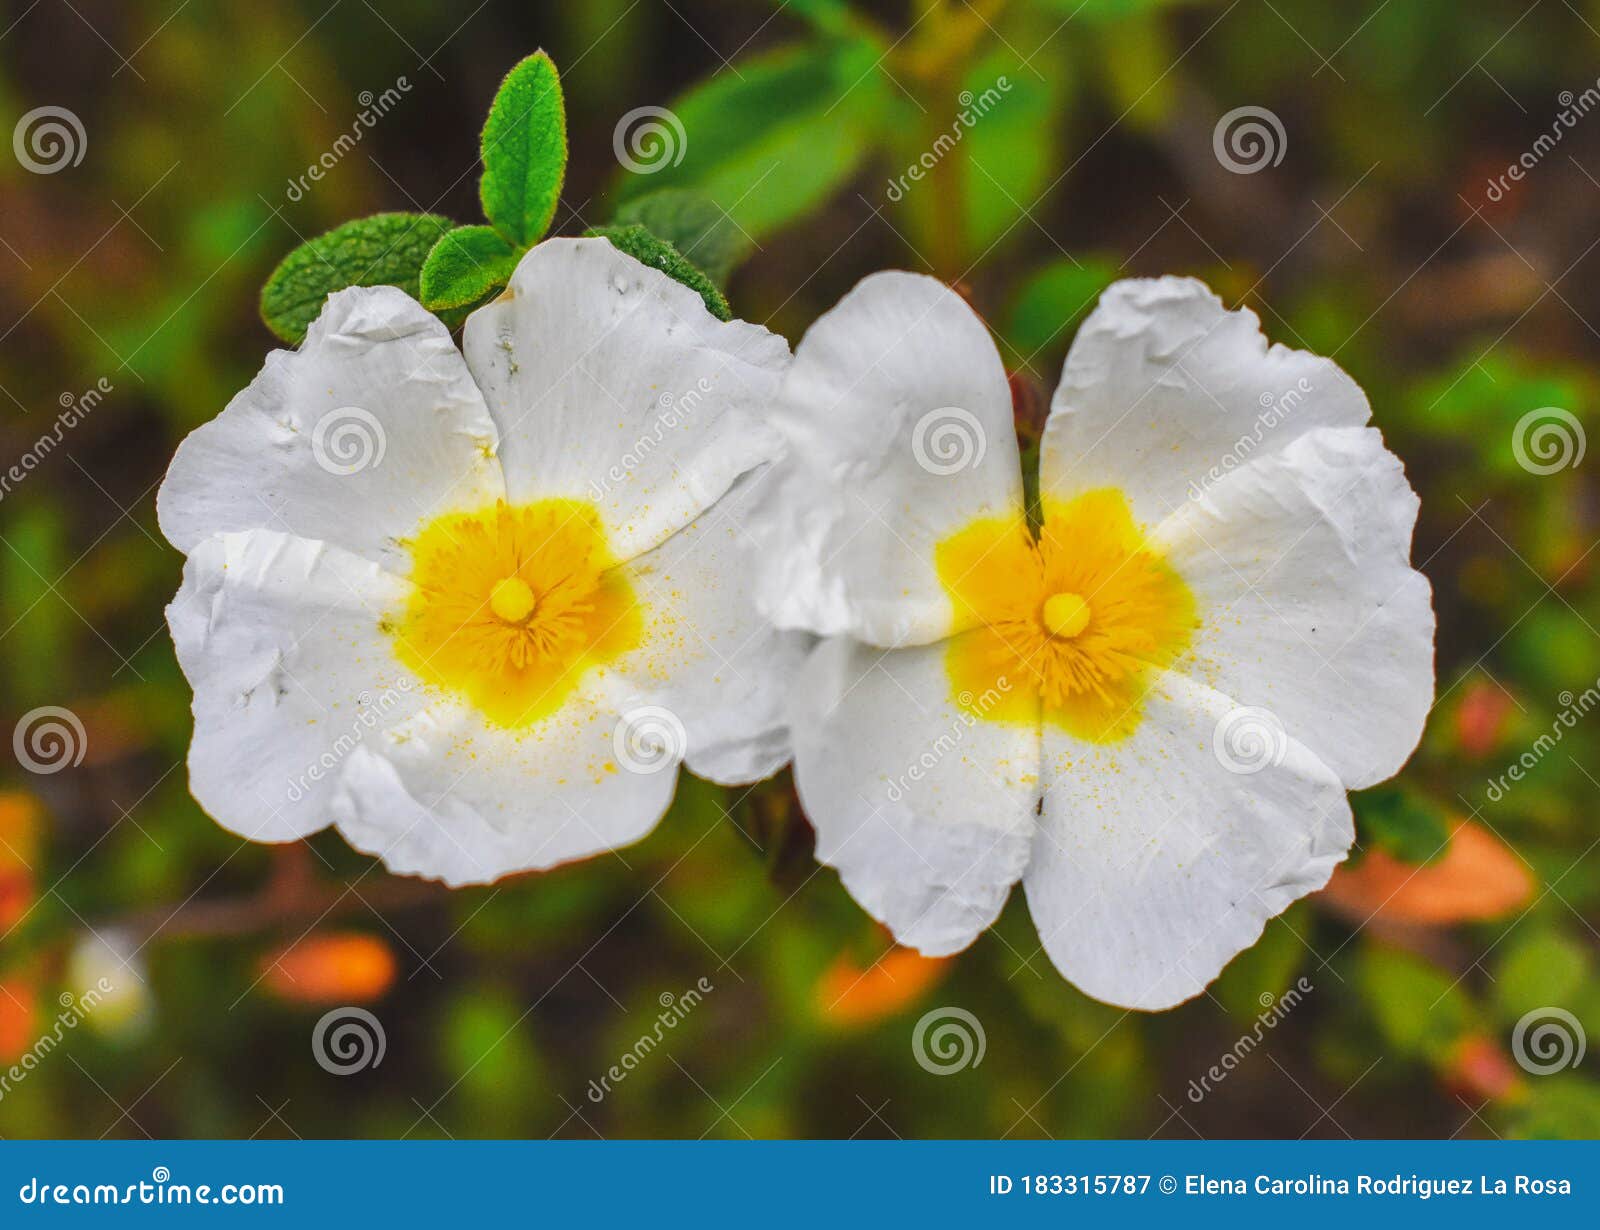 jaguarzo morisco cistus salviifolius  flower